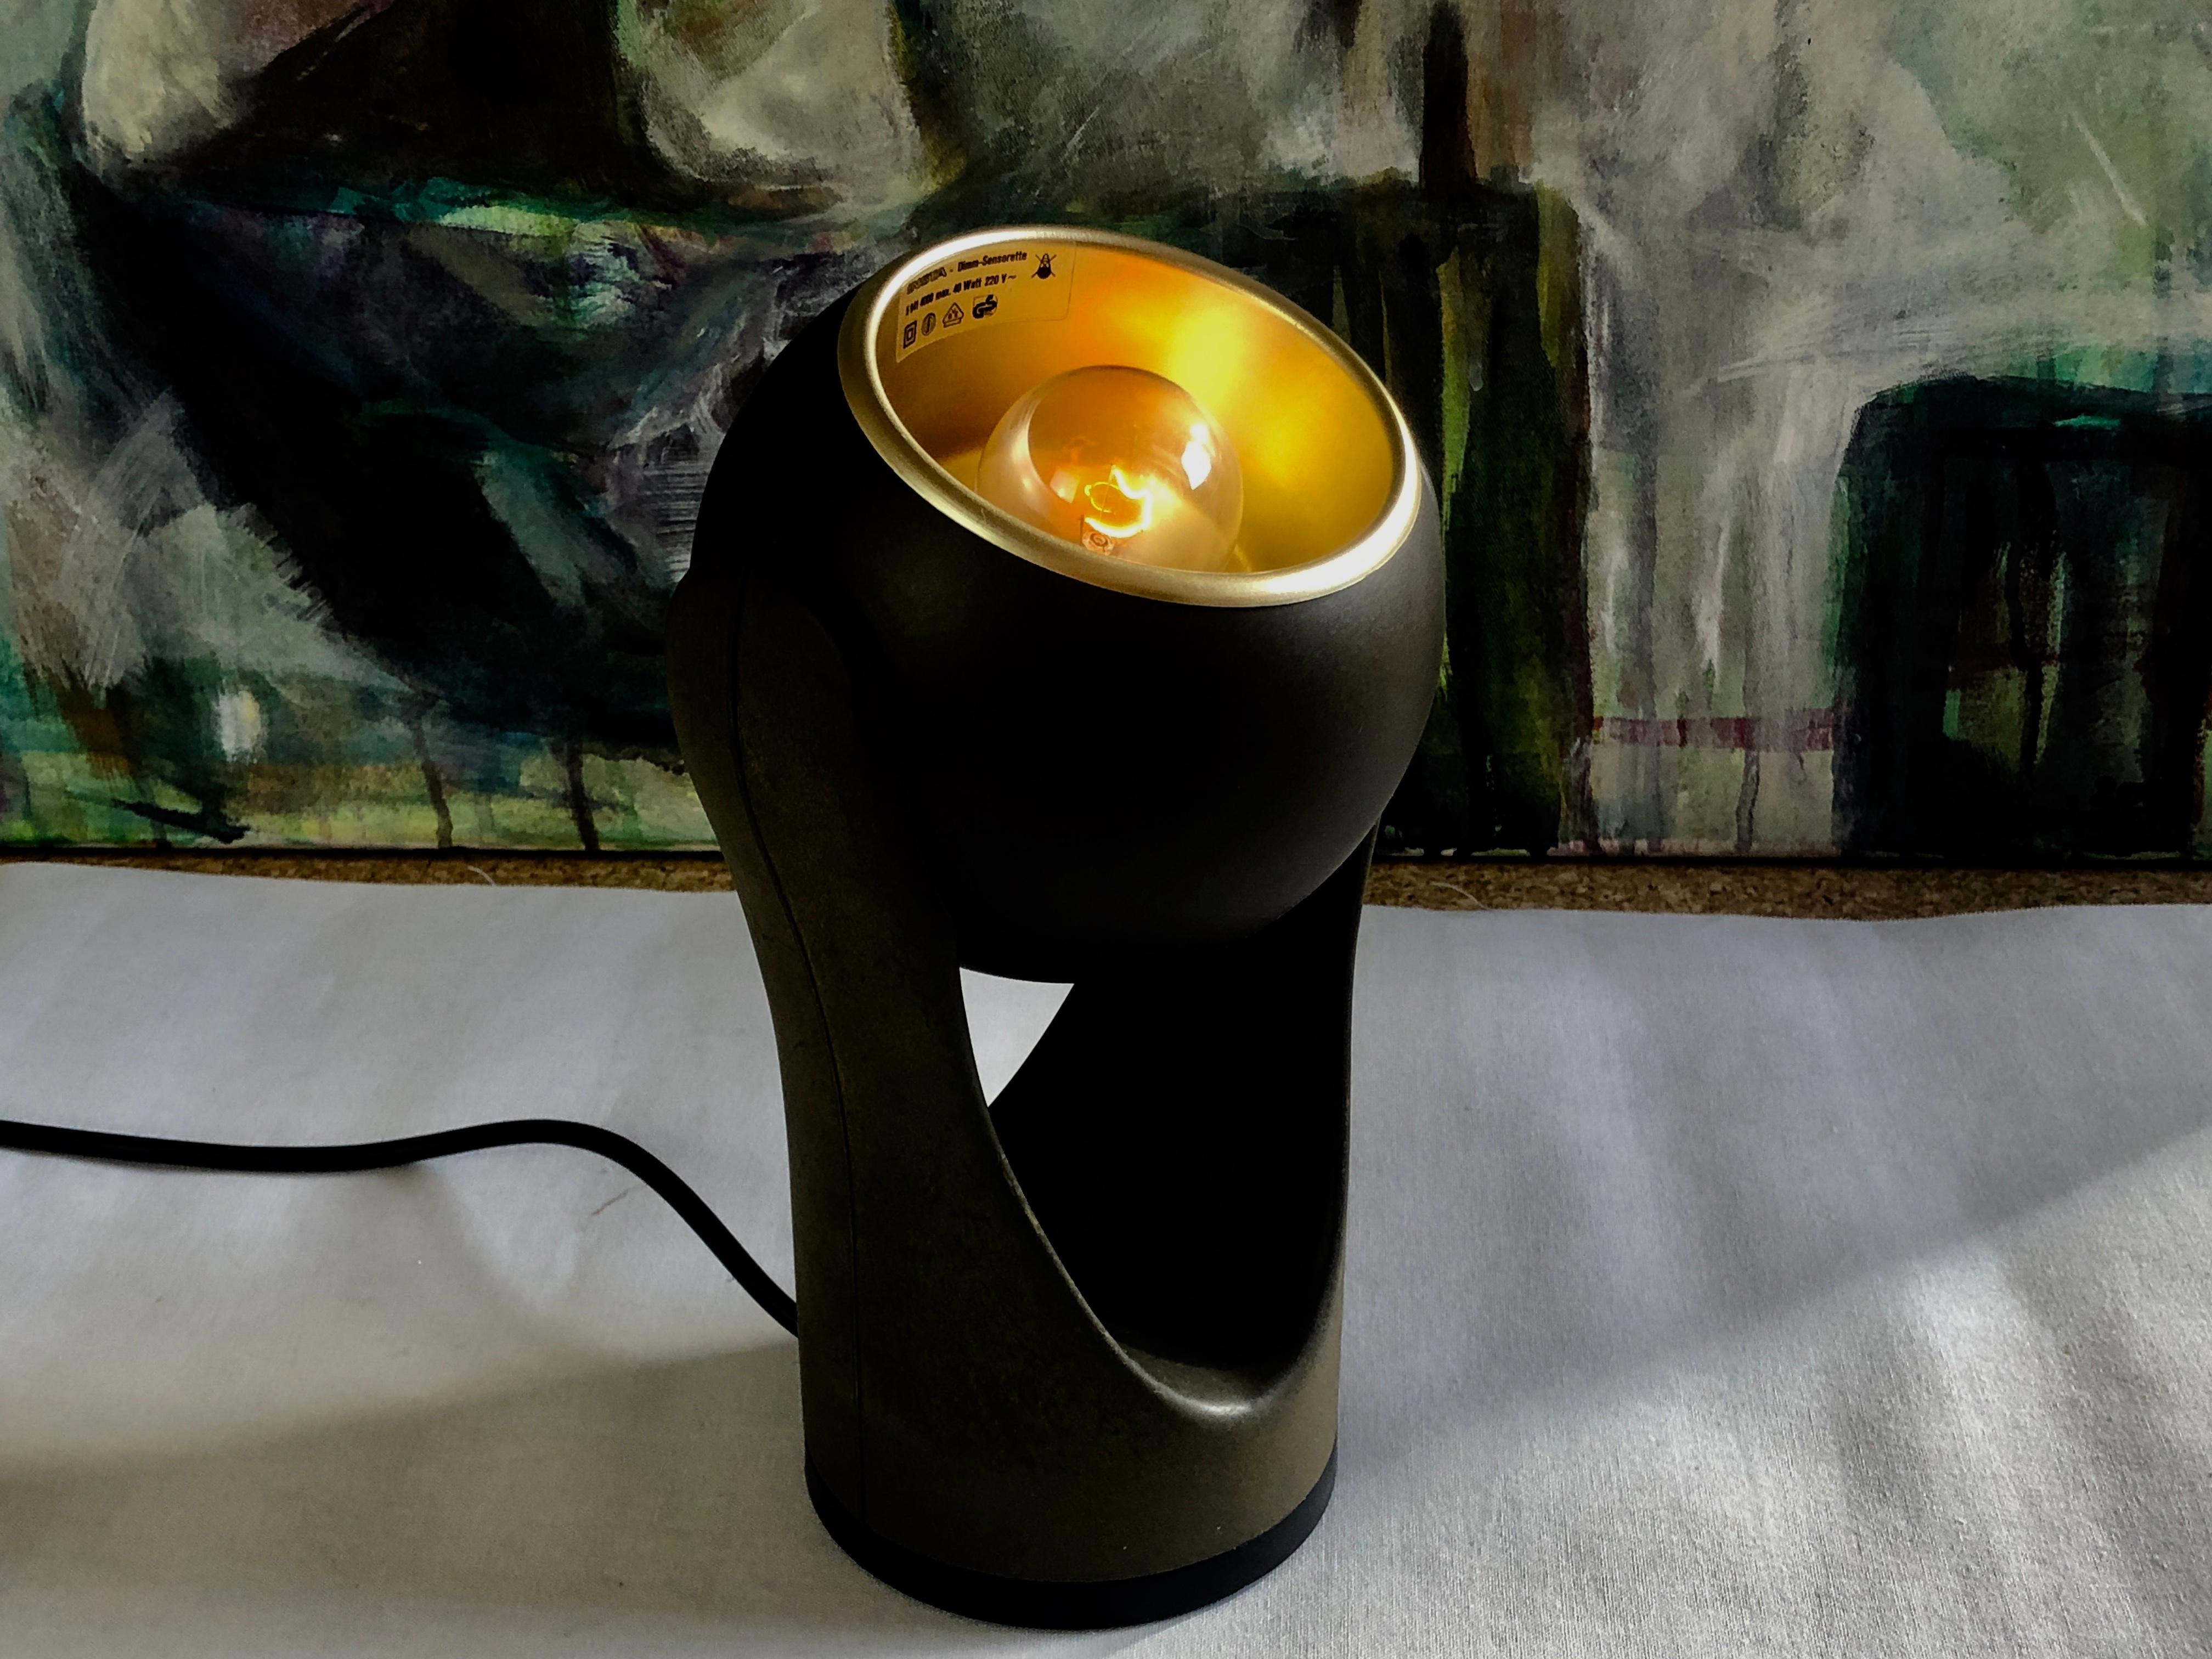 Plastic 1970s Table Lamp Eyeball 'Sensorette' by Insta, German Design Classic